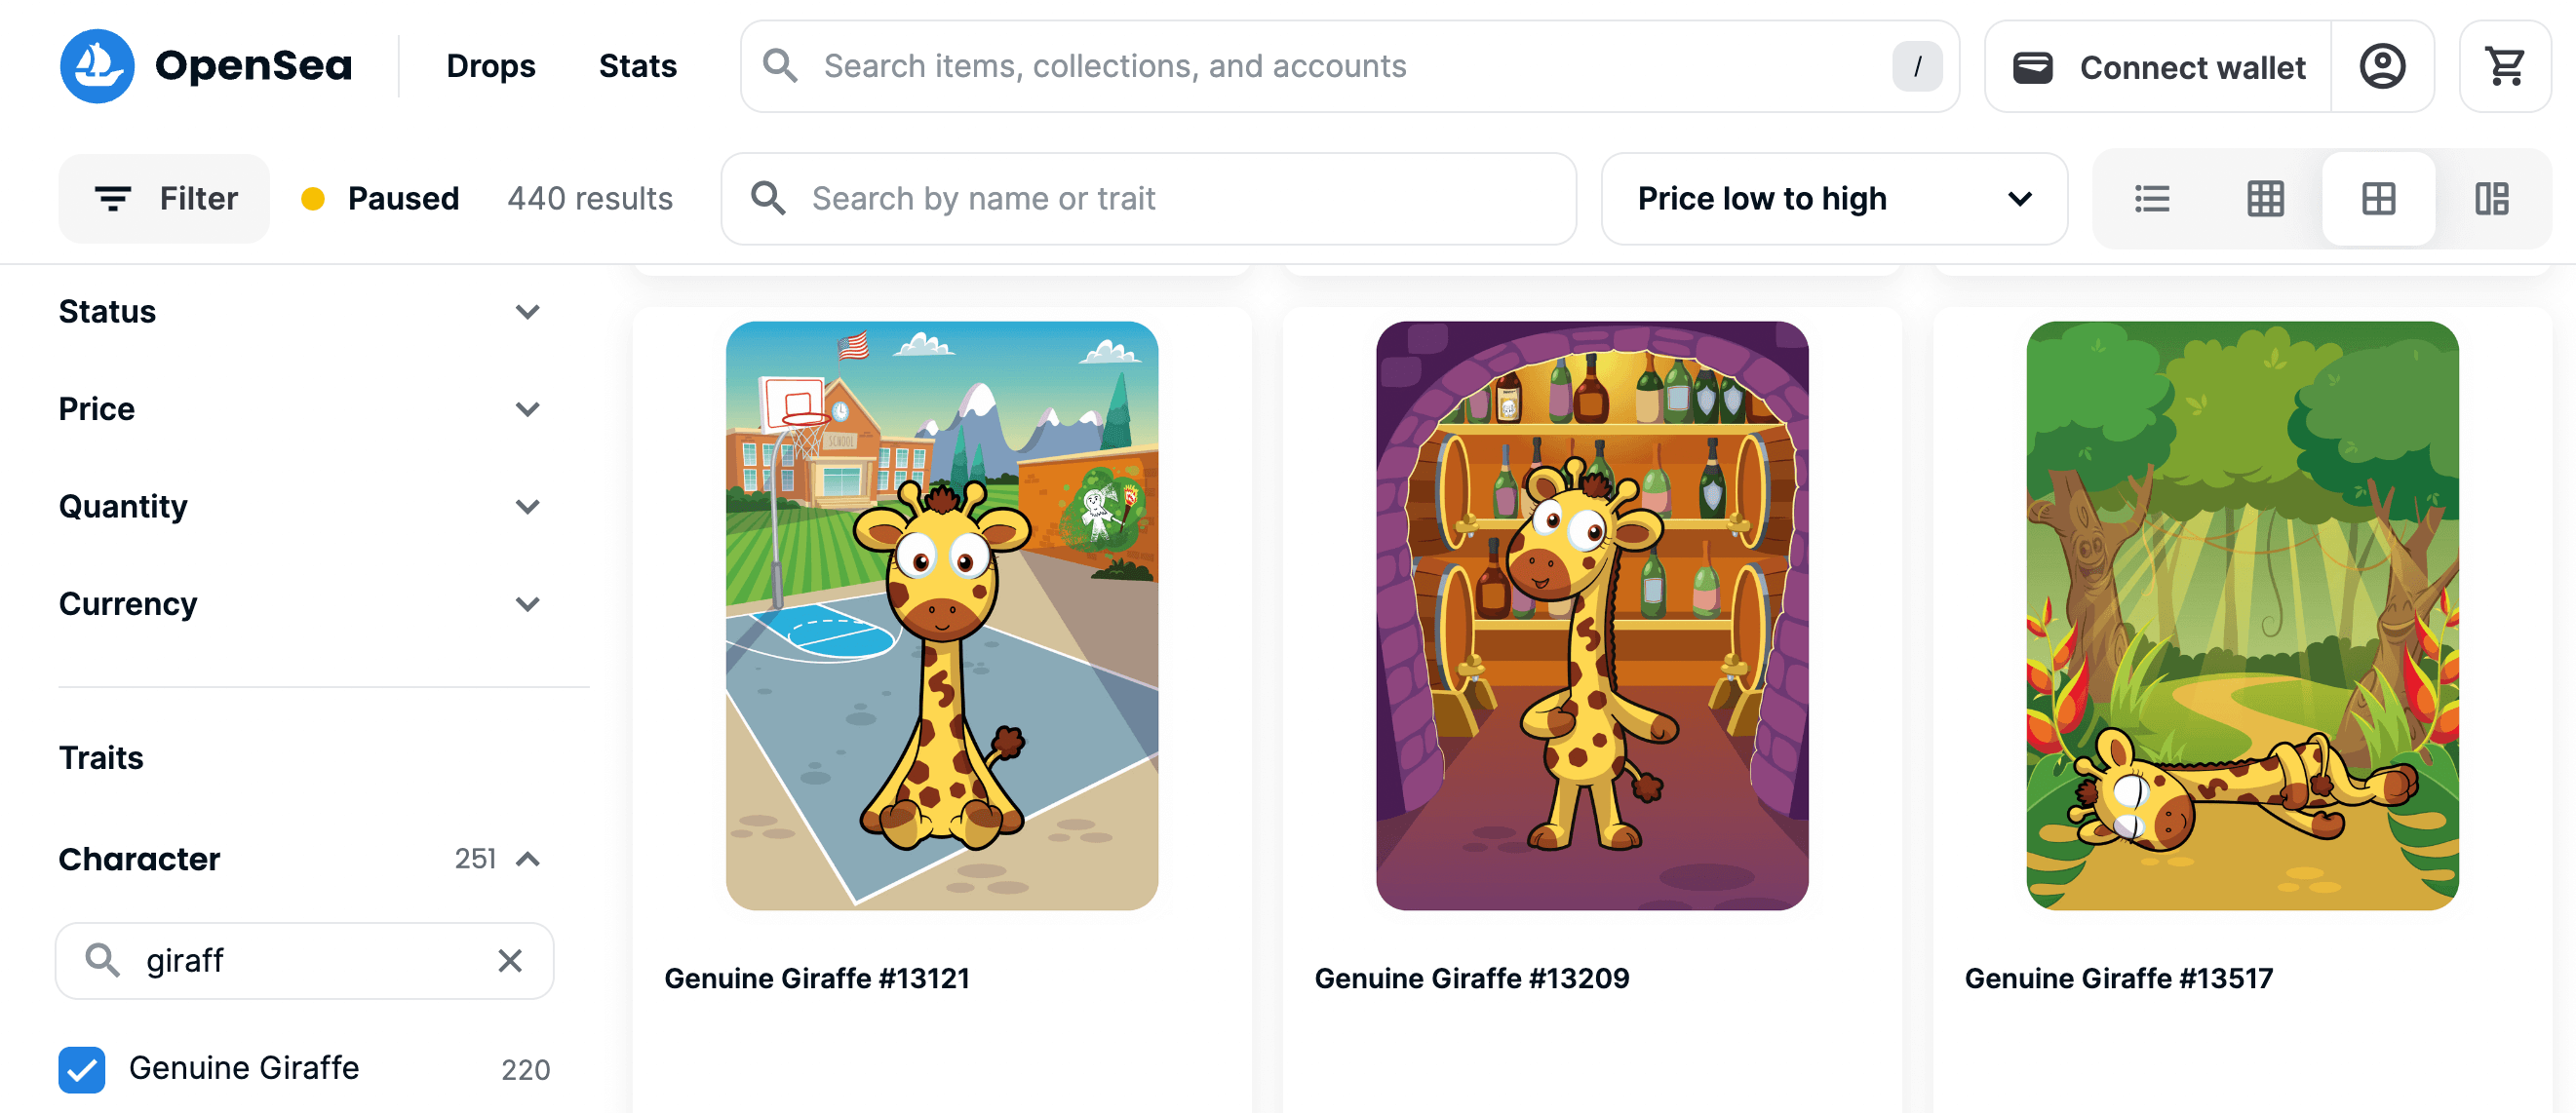 veefriends-series-2-genuine-giraffe-art